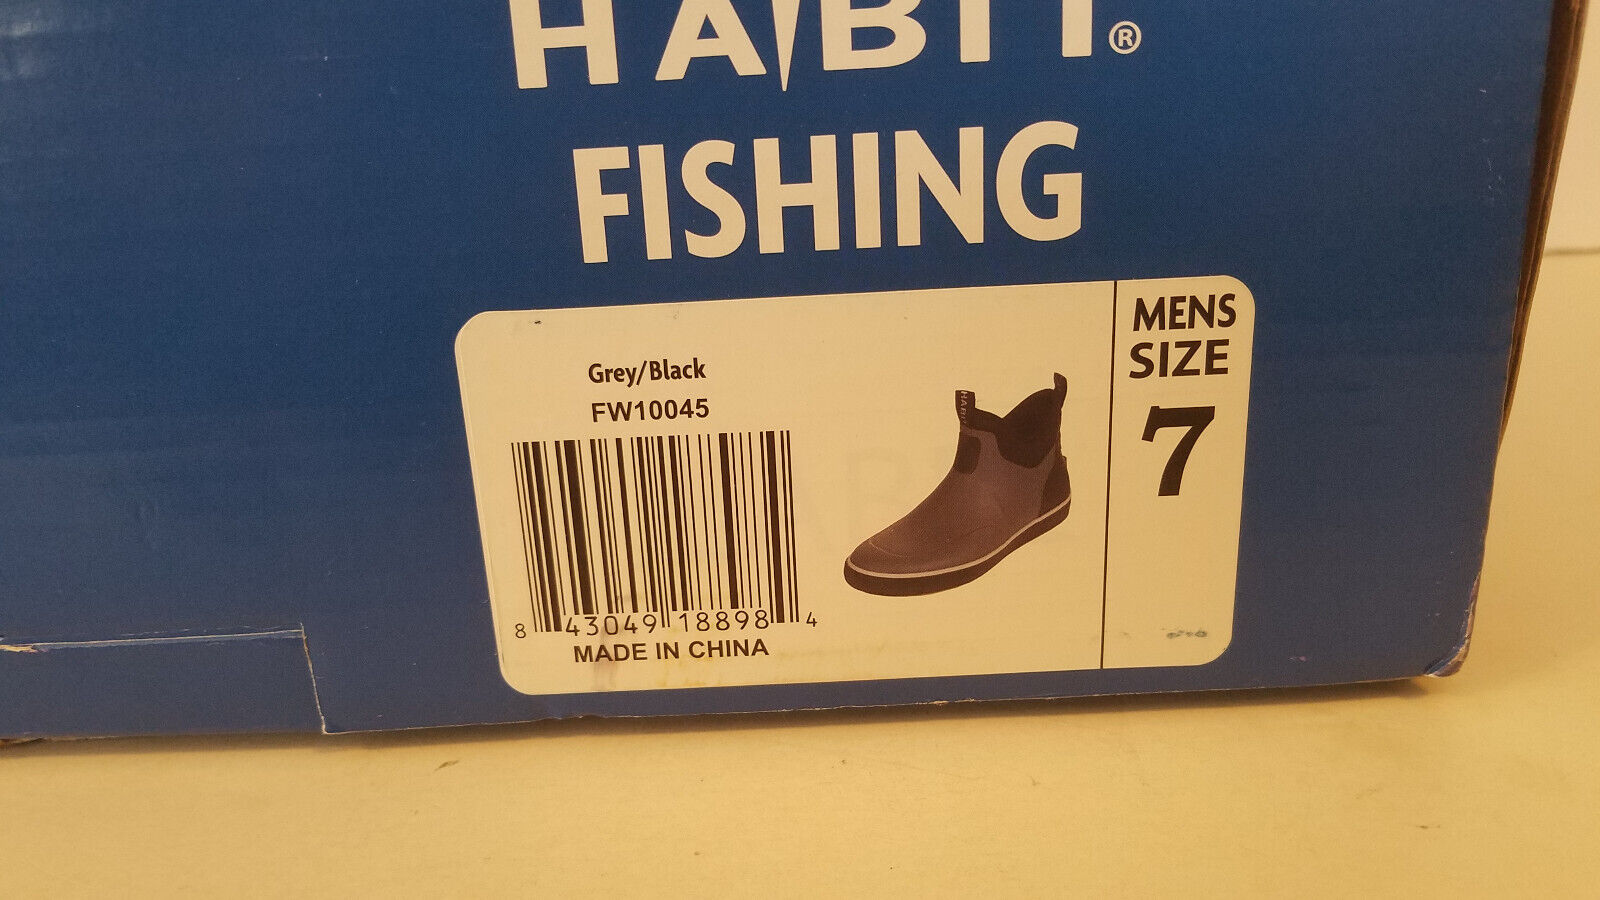 Habit Fishing 7 Ankle Deck Boots, Grey/Black, Mens Size 7 (FW10045)